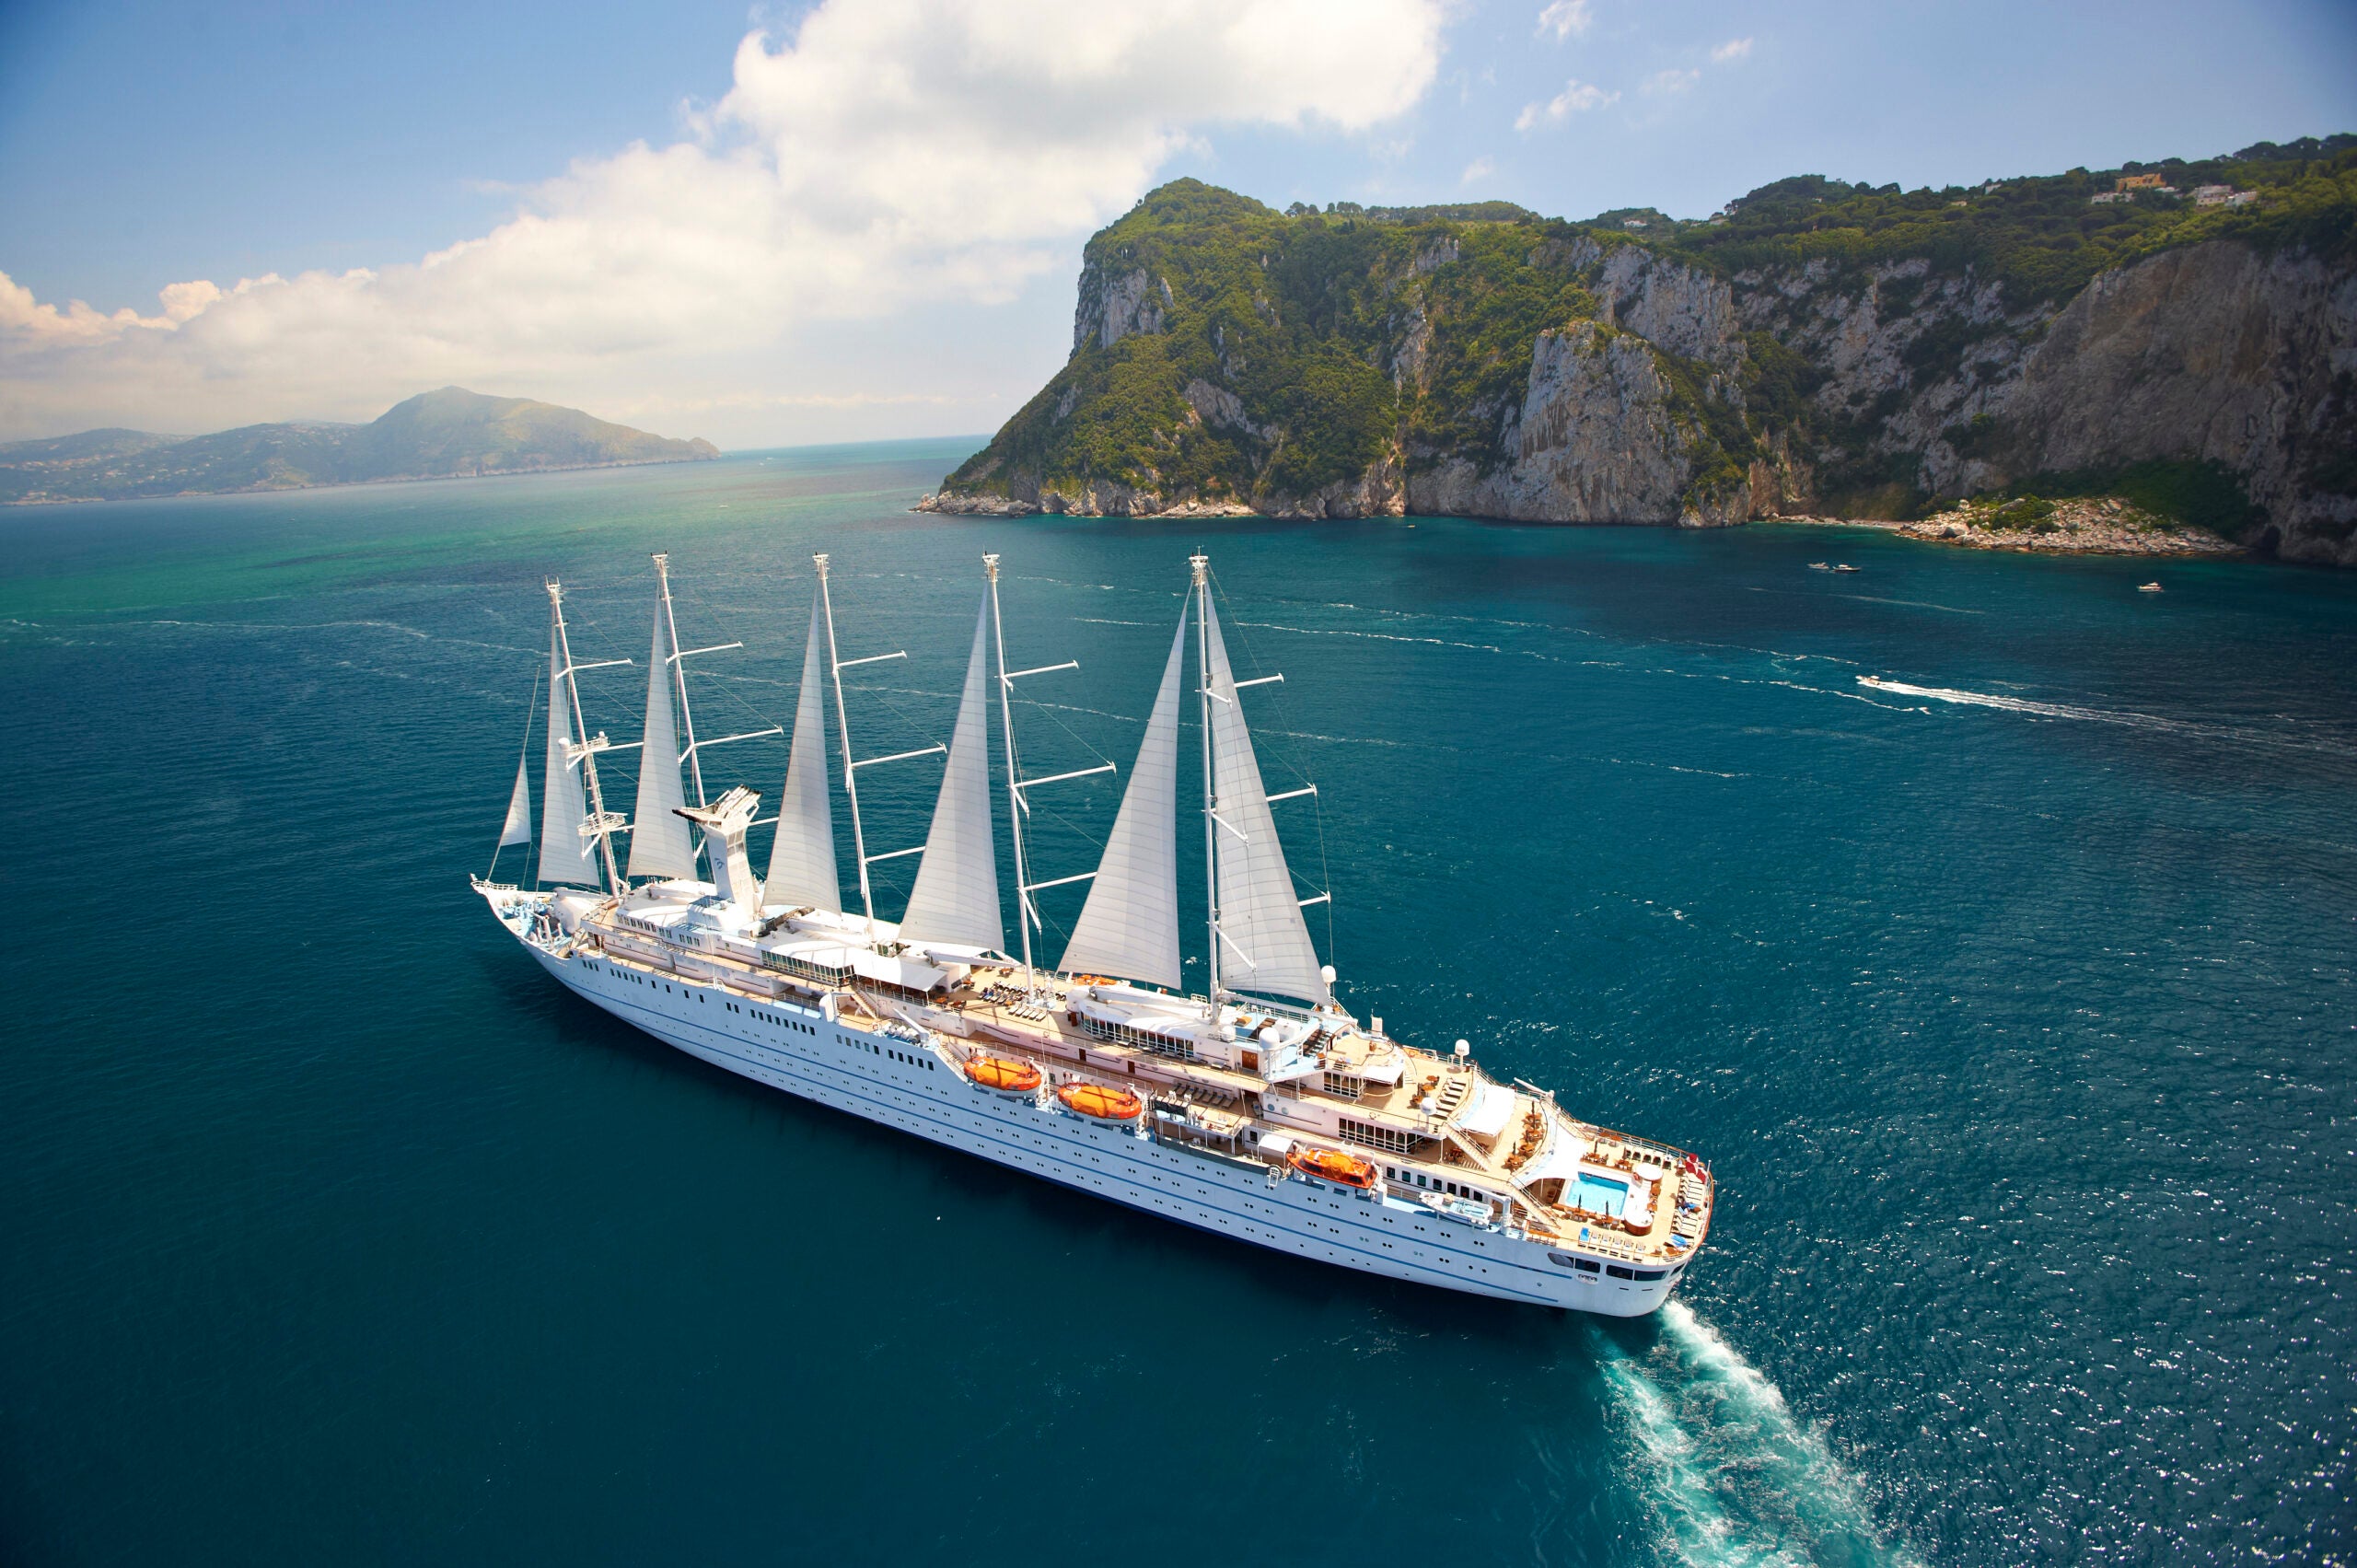 windstar cruises ports of call